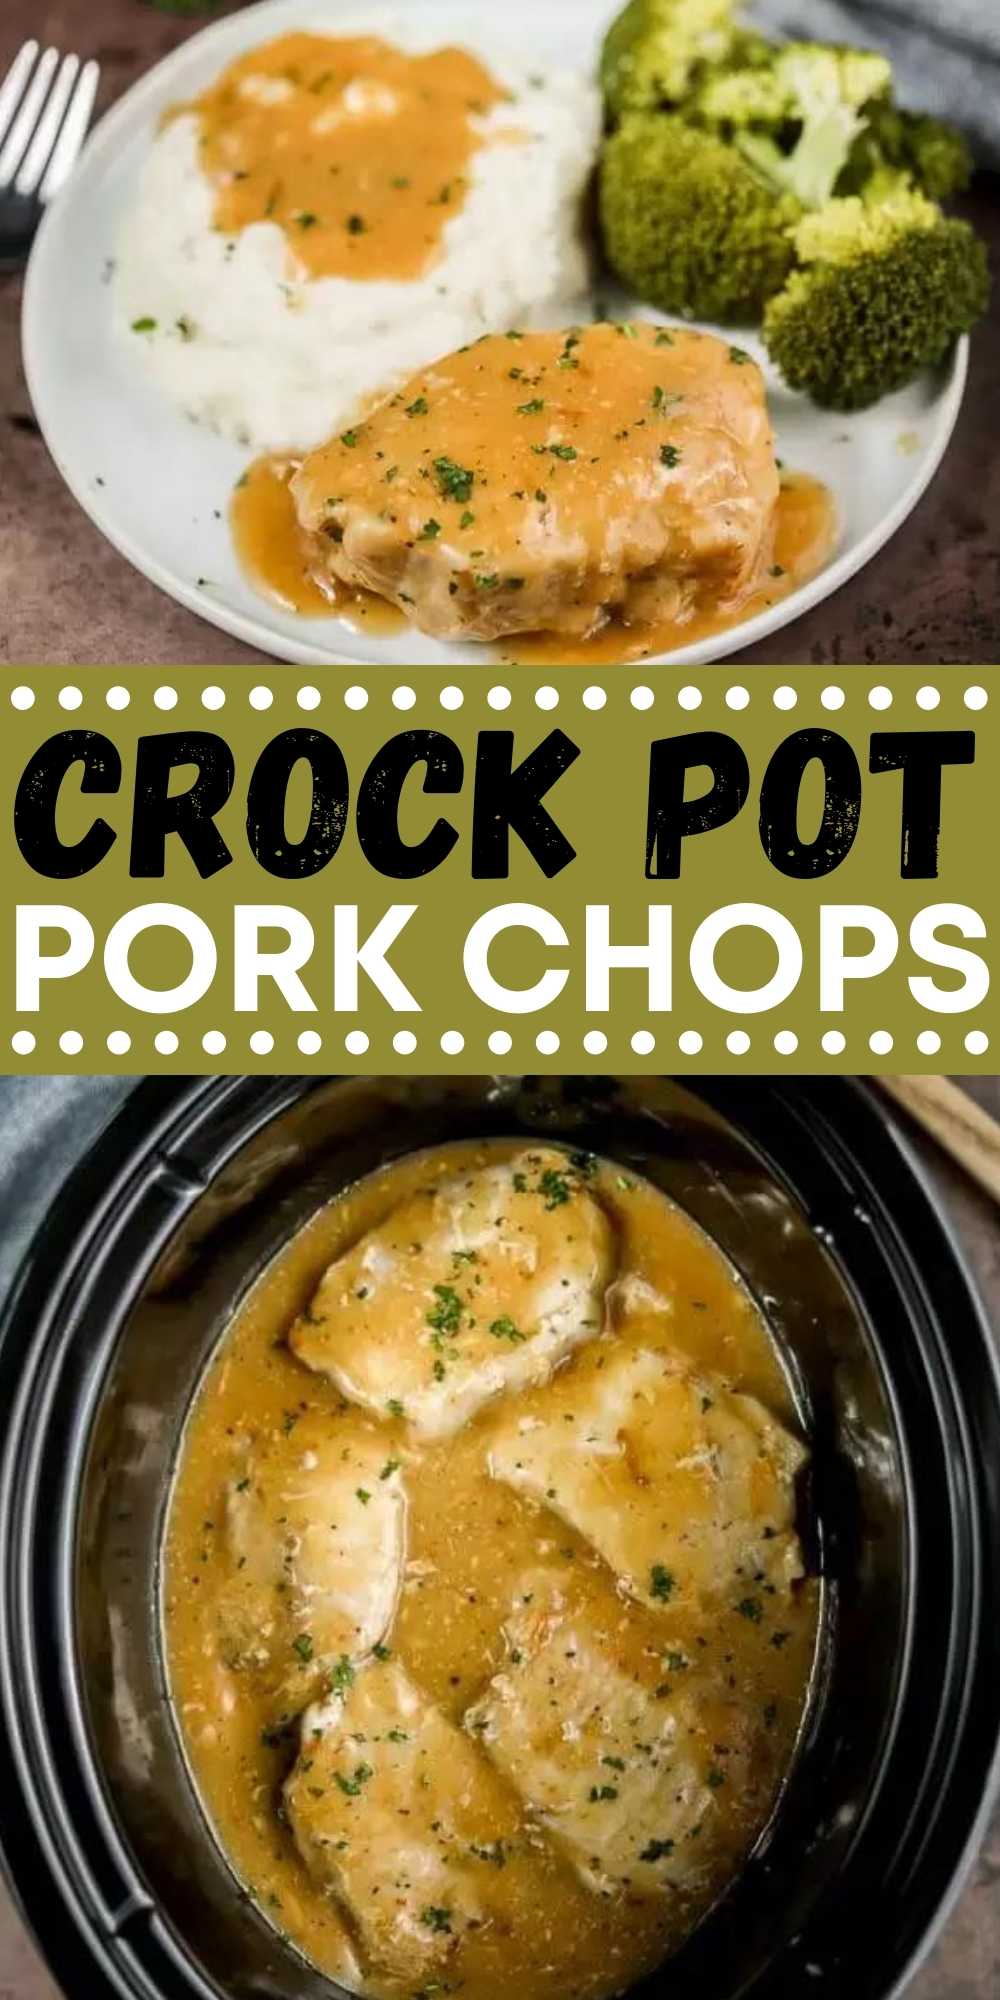 https://www.eatingonadime.com/wp-content/uploads/2022/01/Crock-Pot-Pork-Chops-Pin-3.jpg